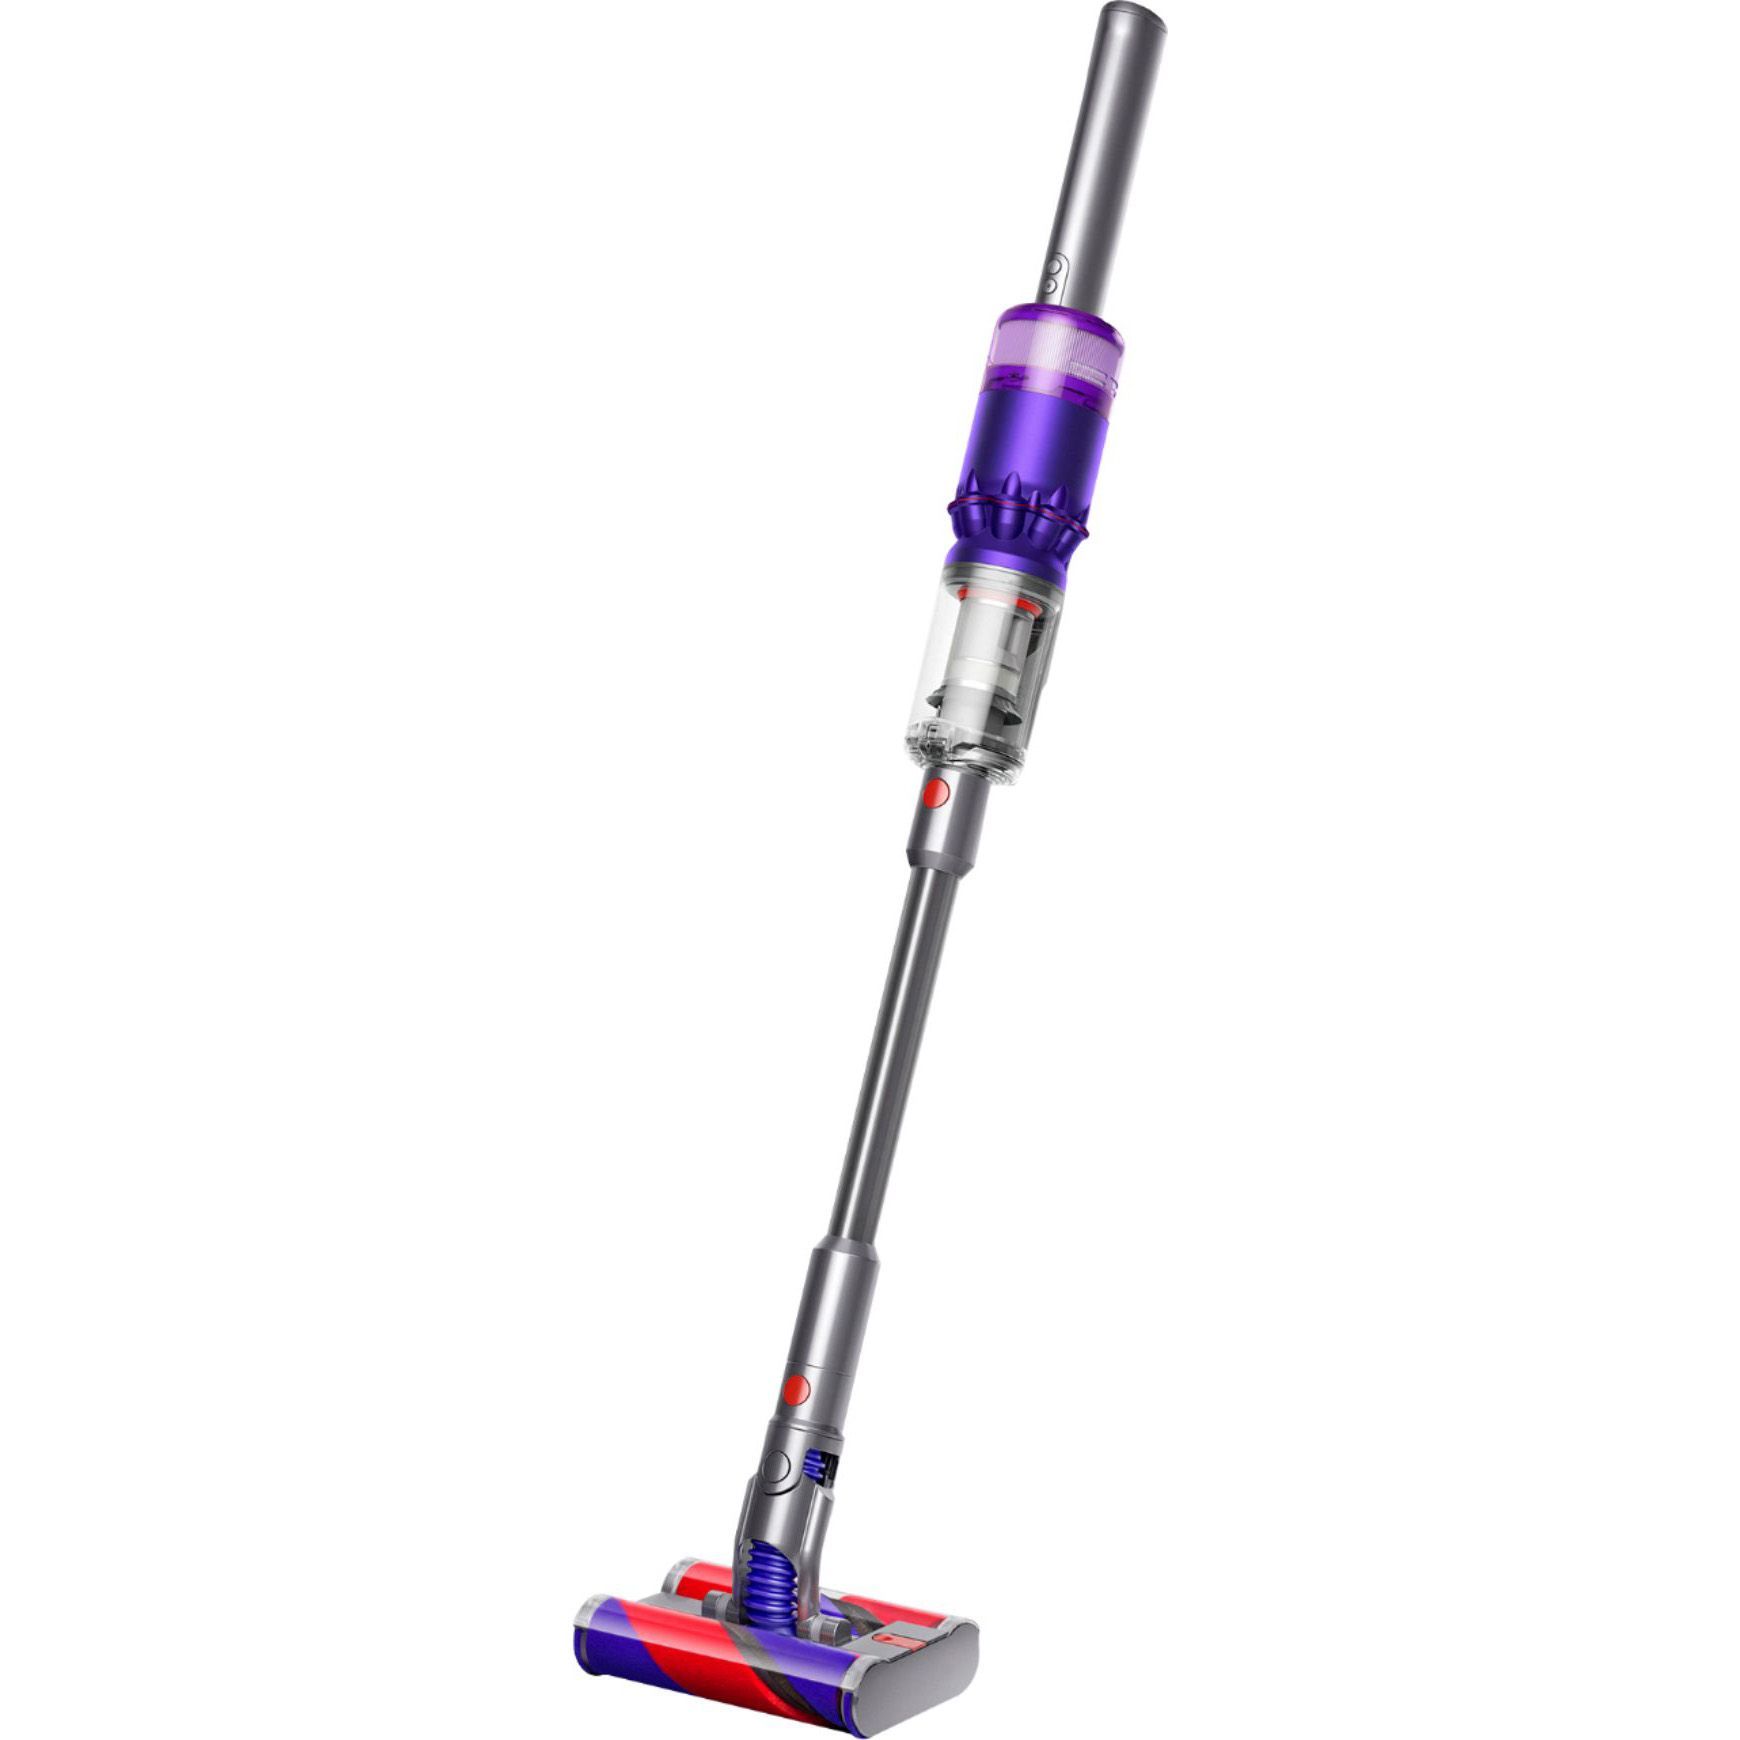 Top Cordless Vacuum Cleaners, Best Stick Vacuum For Hardwood Floors And Carpet